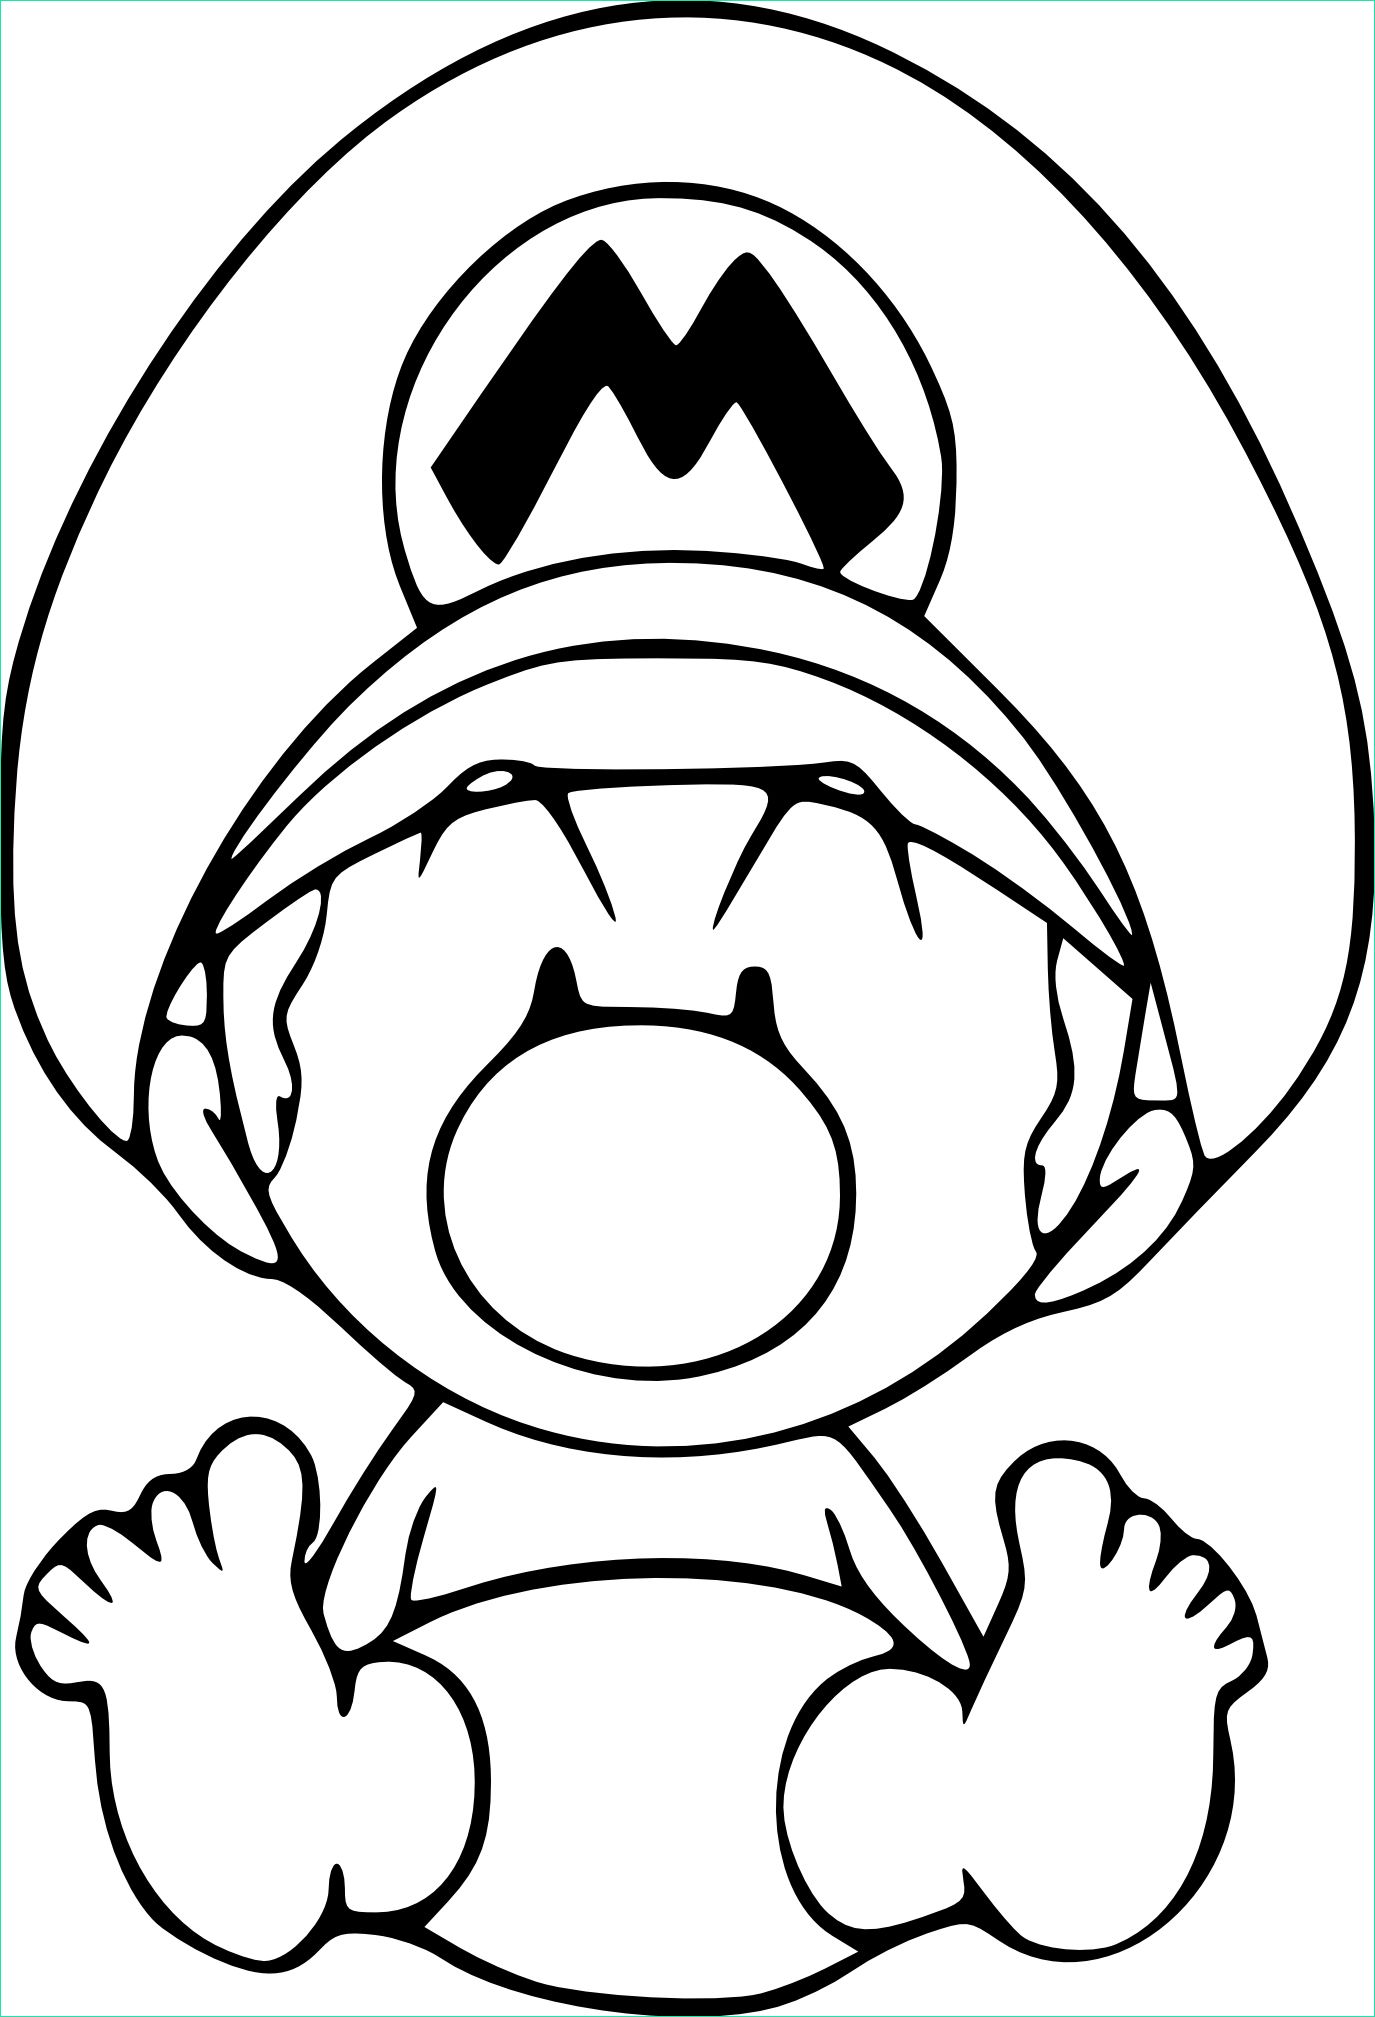 Coloriage à Imprimer Mario Cool Photos Coloriage Bébé Mario à Imprimer Sur Coloriages Fo